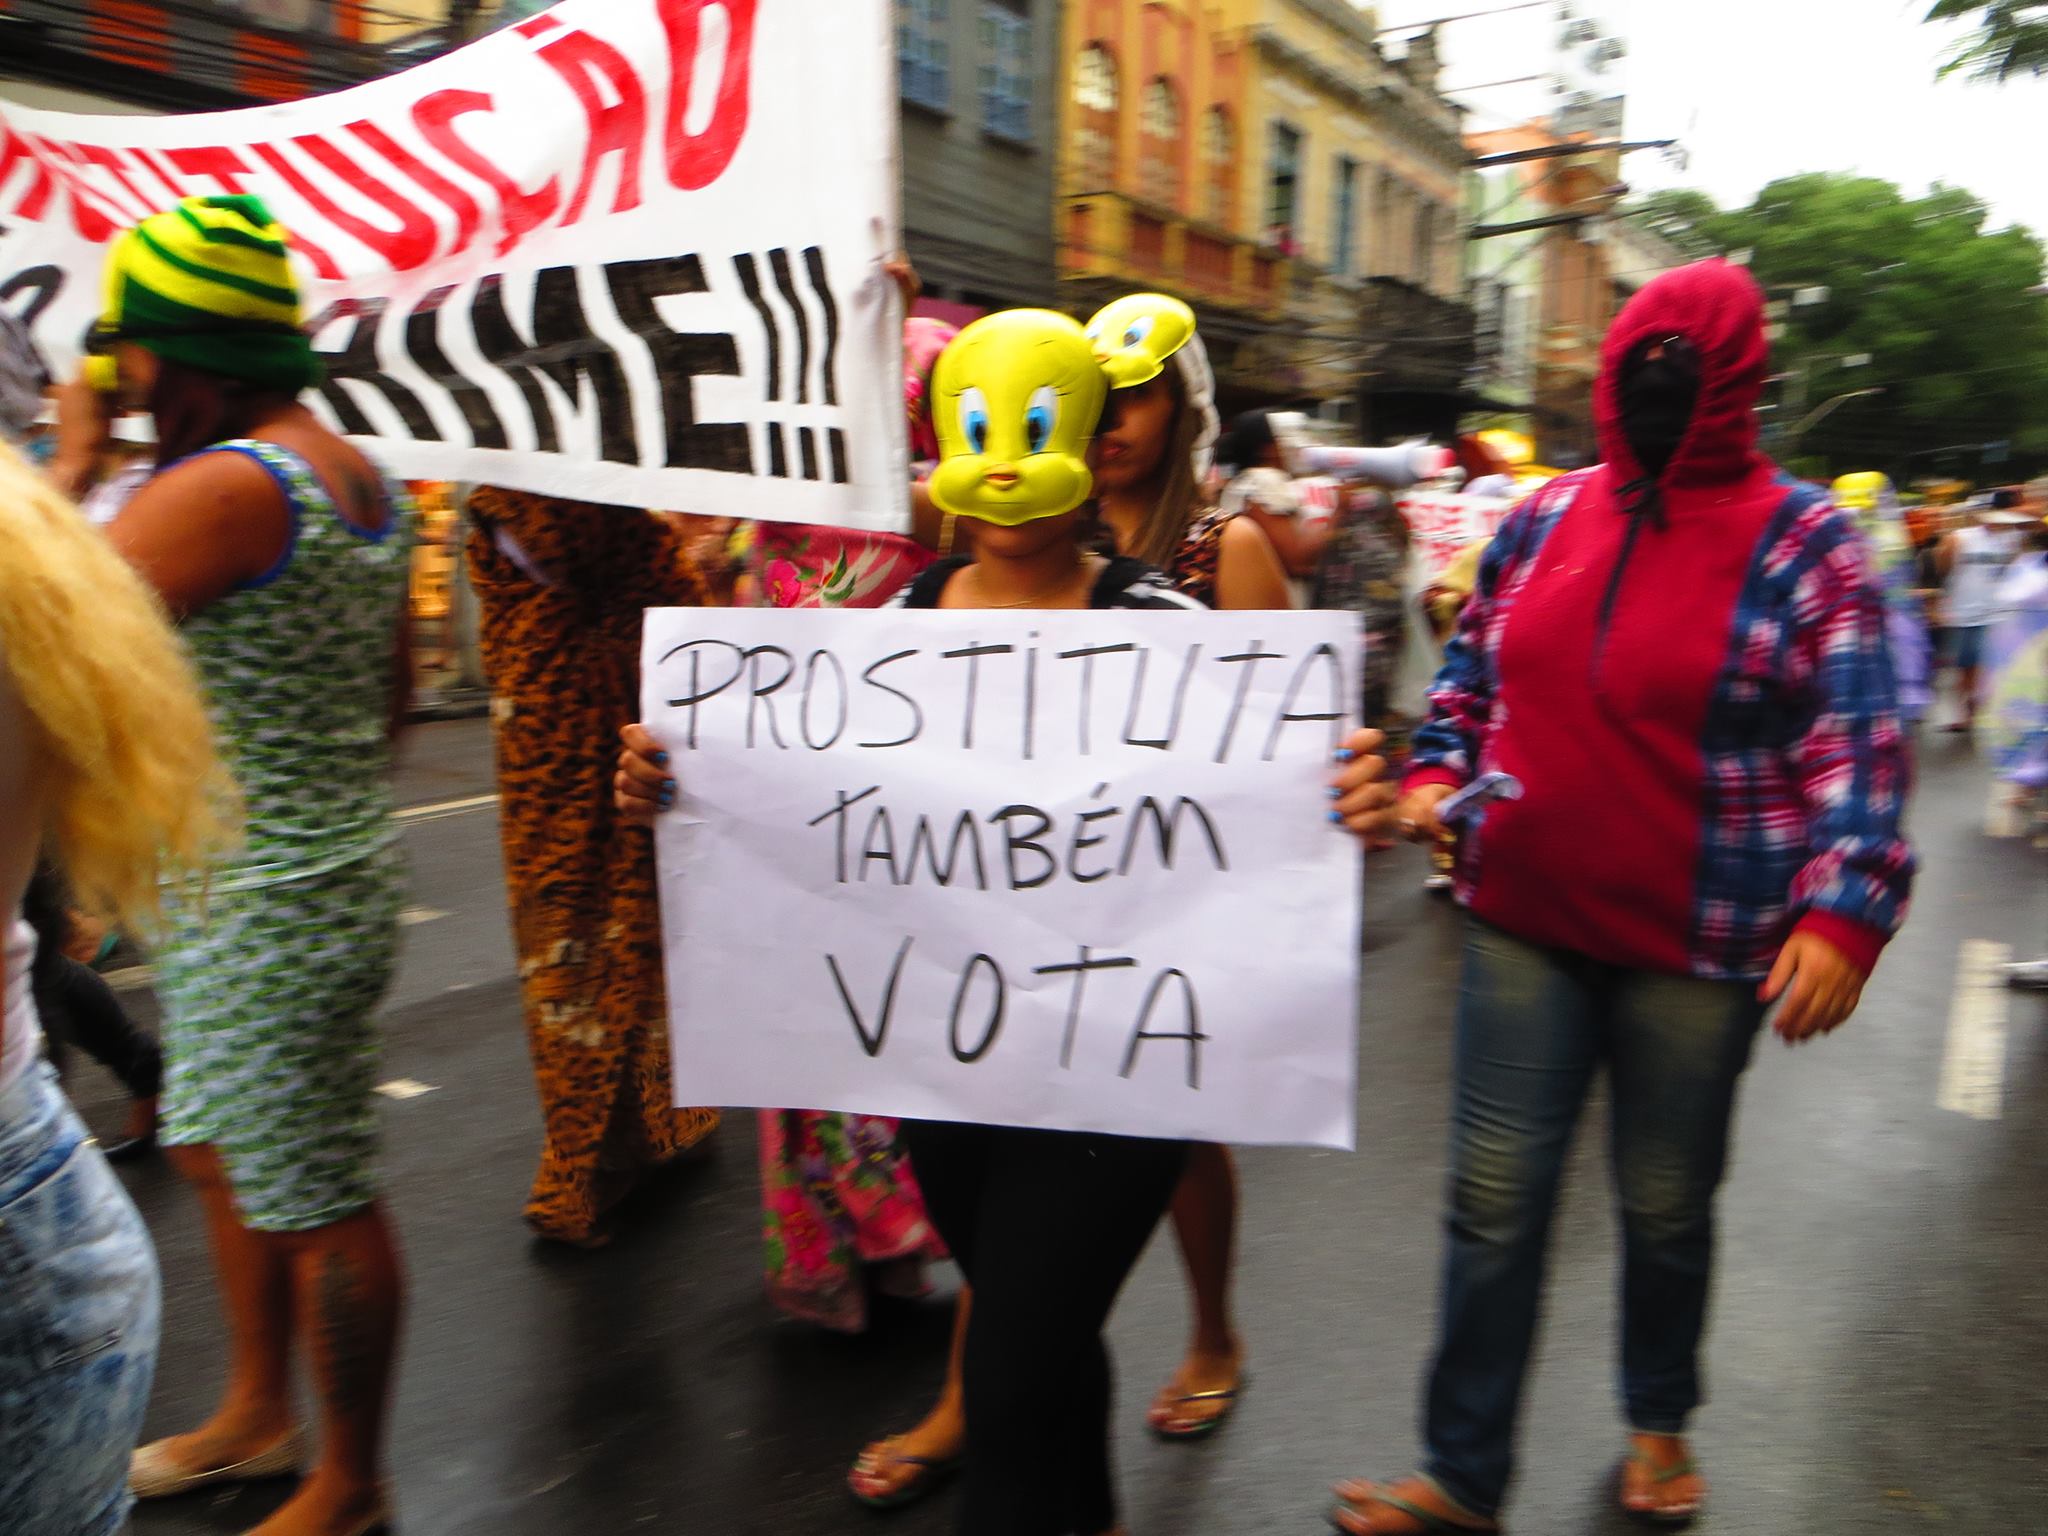 "Prostitutes also vote"